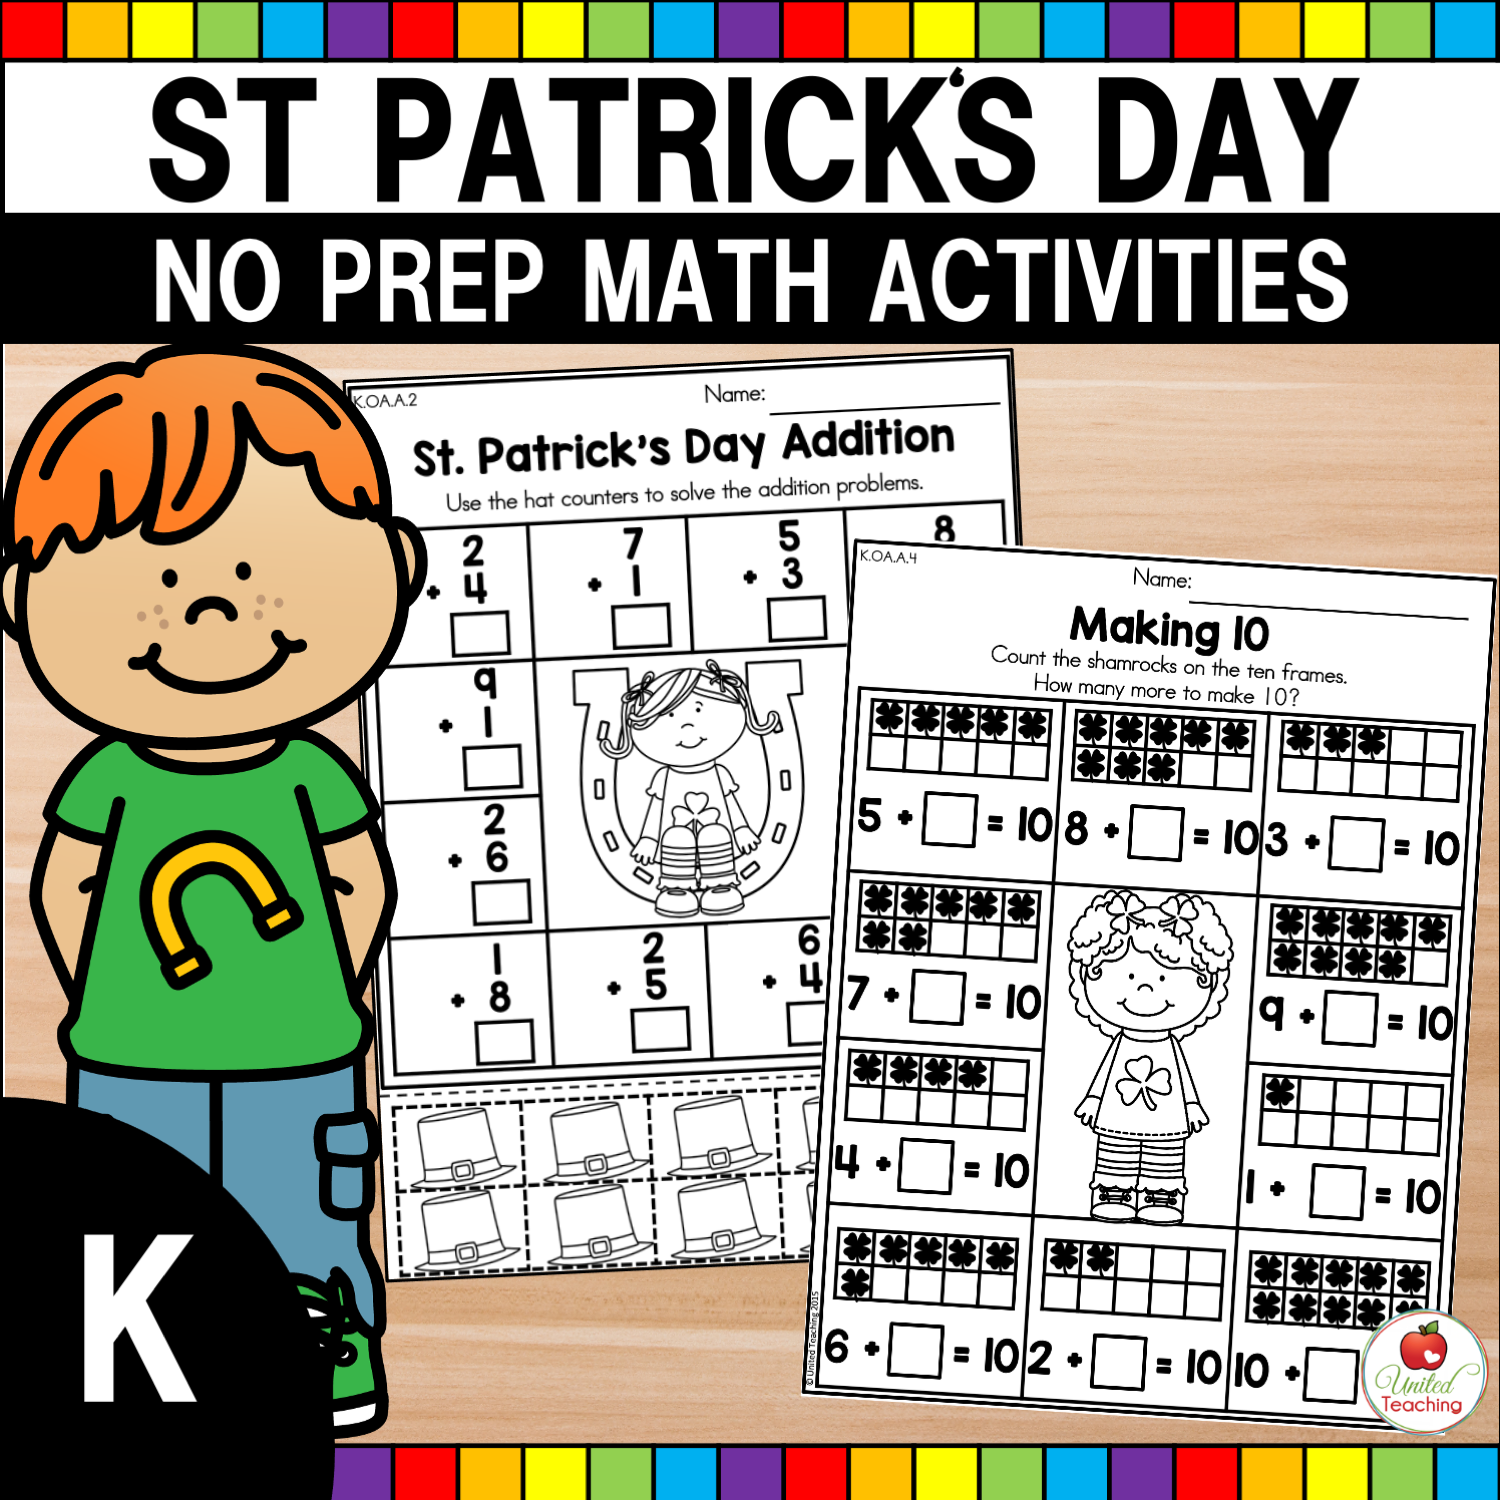 https://unitedteaching.com/wp-content/uploads/2021/03/St-Patricks-Day-Math-Activities-K-Cover.png